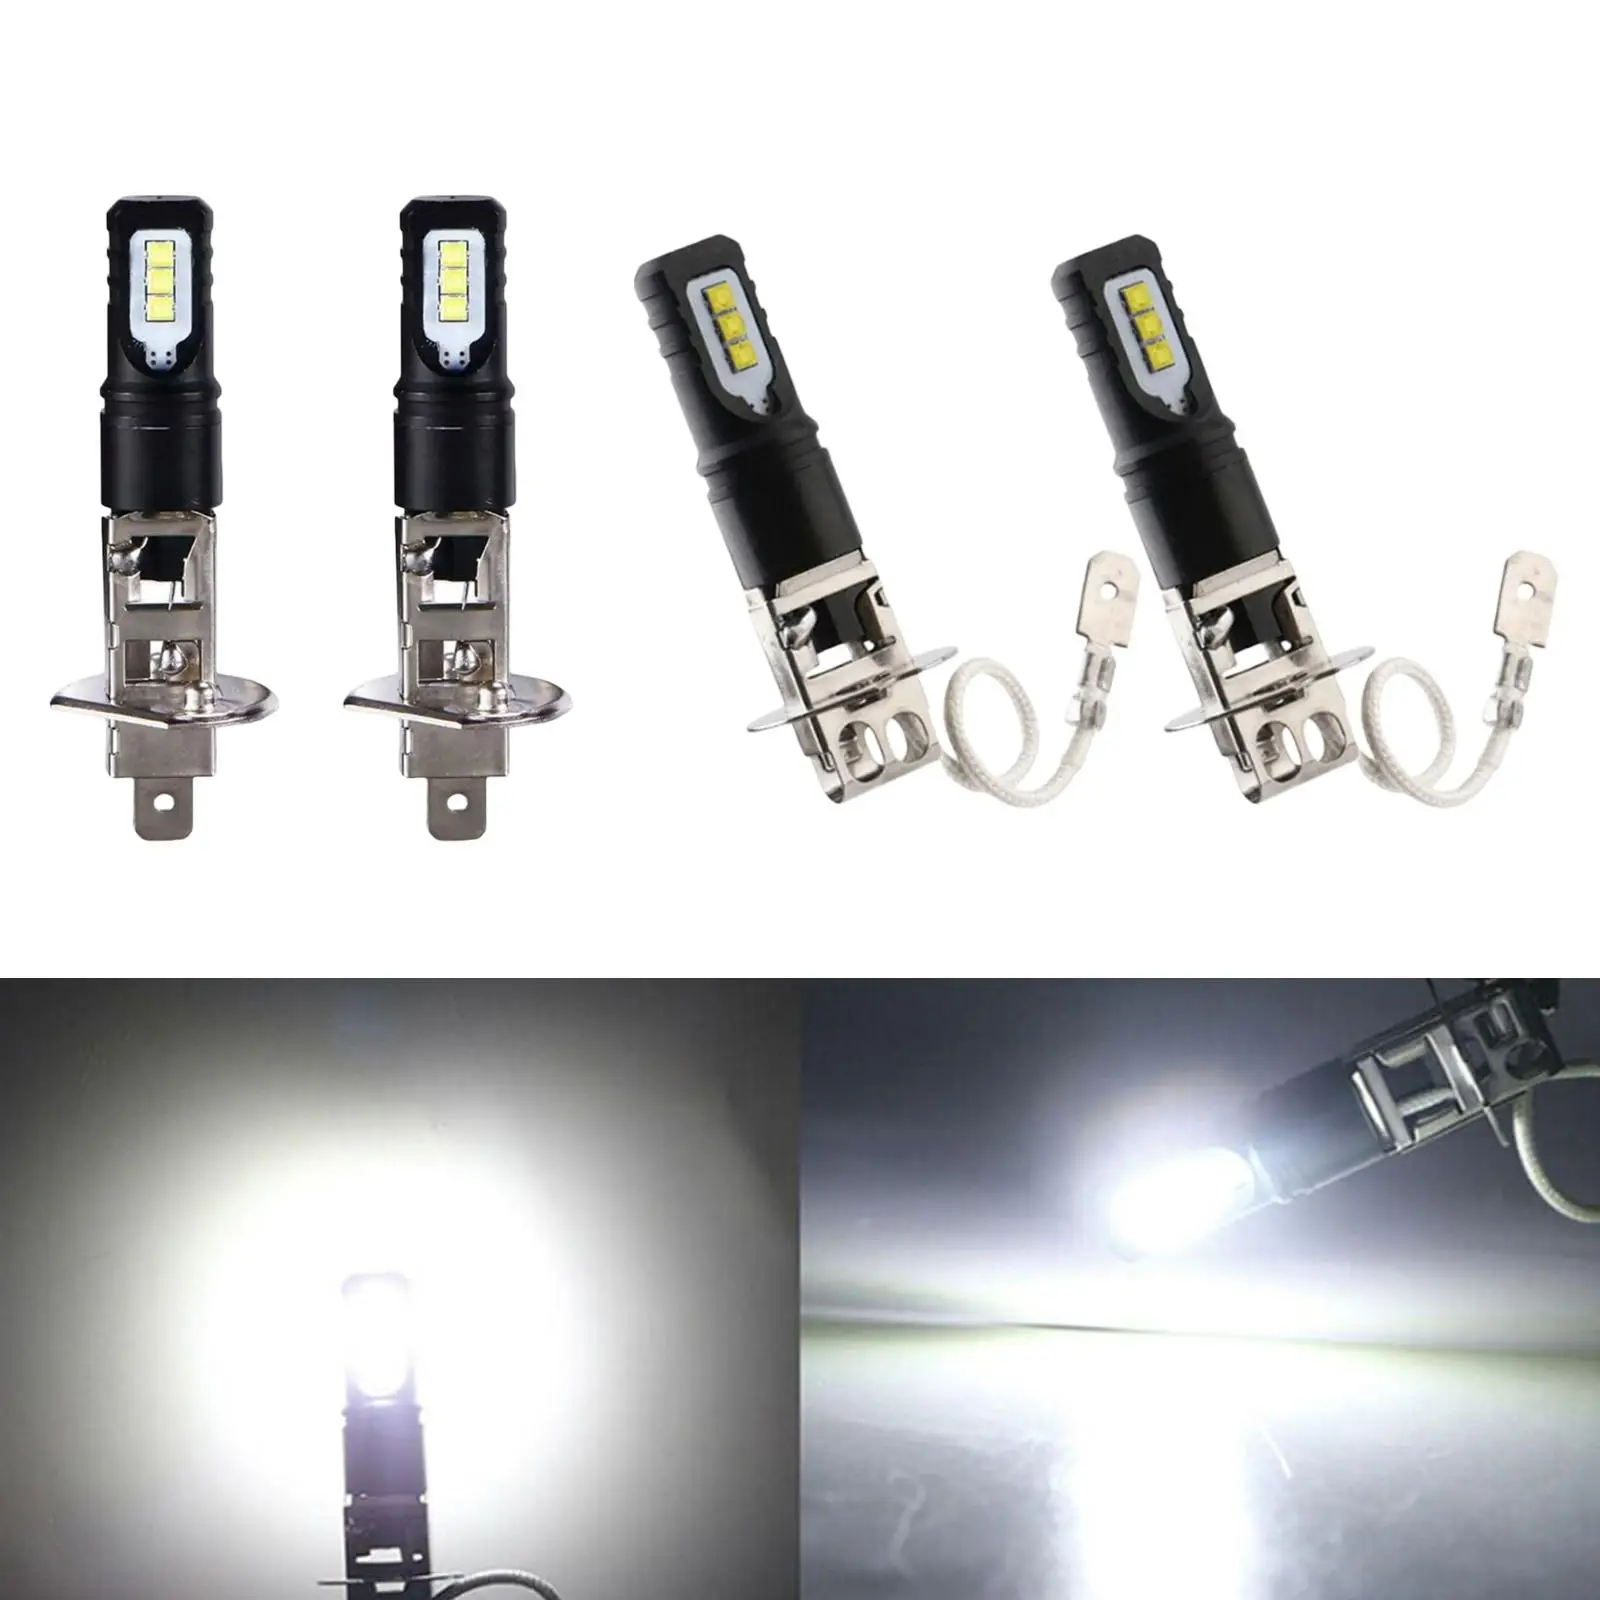 2-Pack Auto LED Fog Light Bulbs H1 H3 1200LM 12-30V High Power Daytime Running Lights Fits for Car Trucks Lighting Components